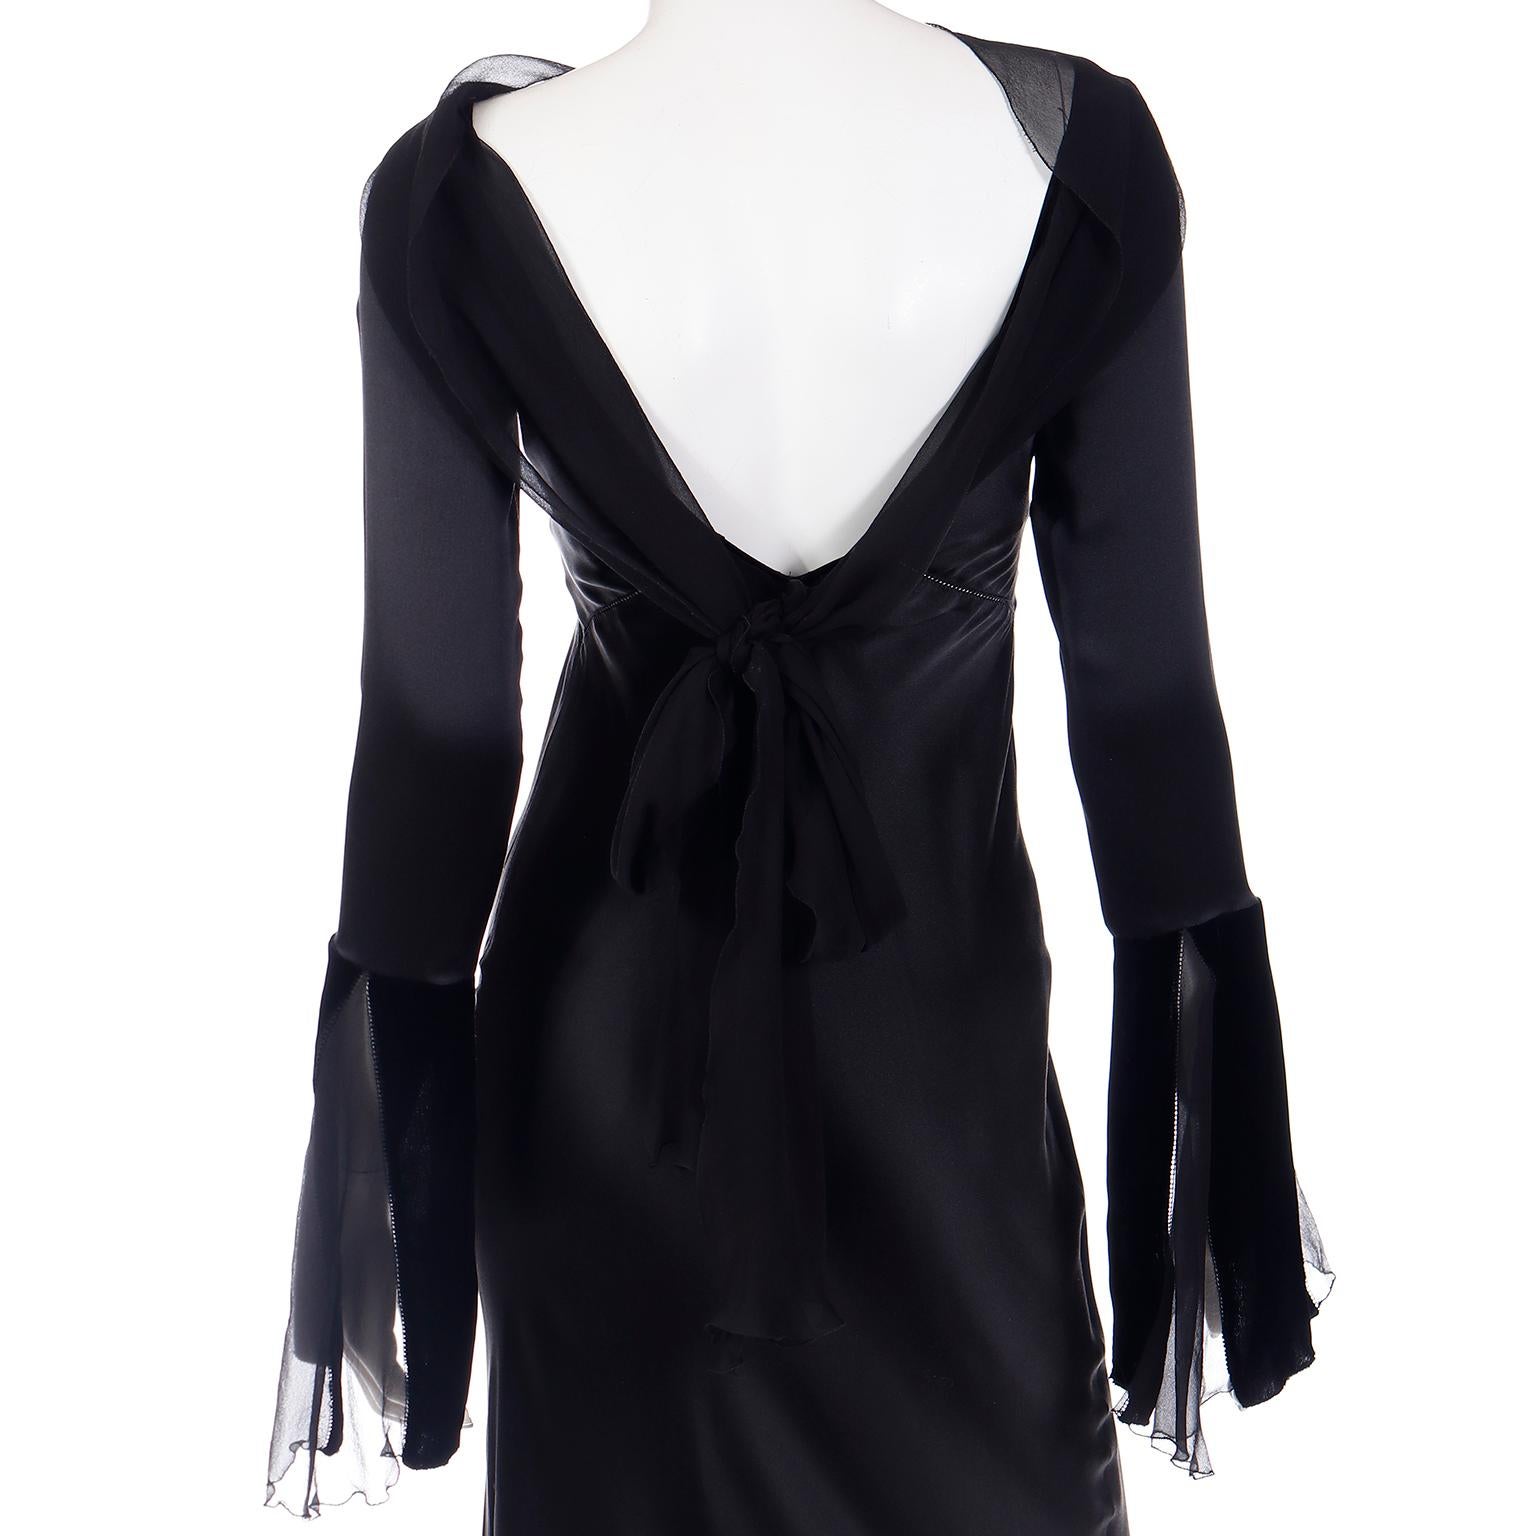 Alberta Ferretti 1990s Vintage Black Silk Evening Gown Dress W Statement Sleeves 5